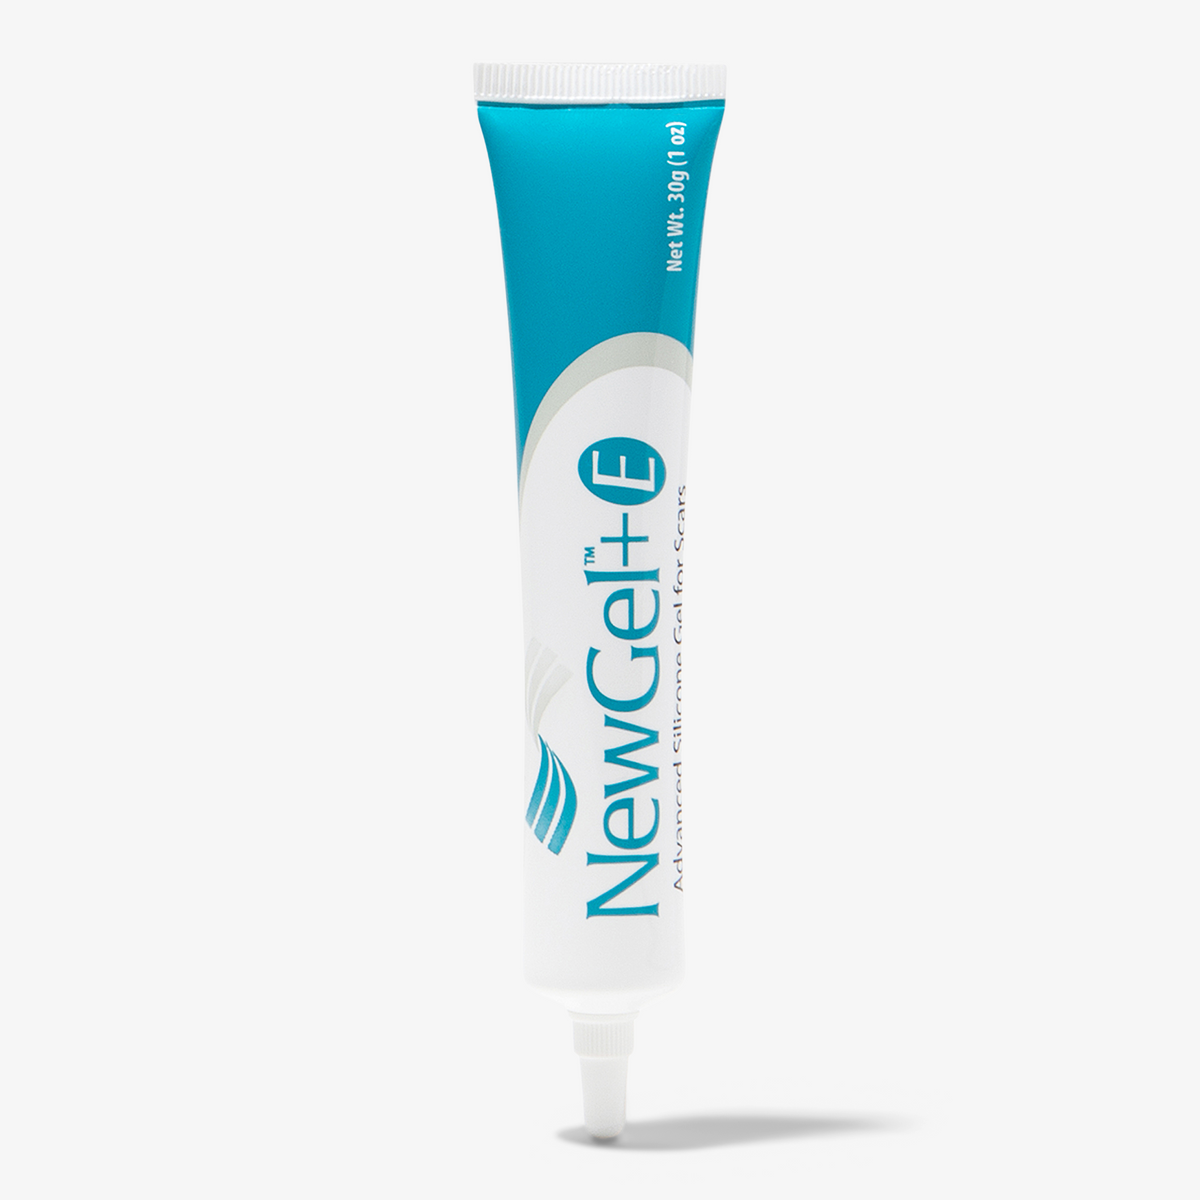 NewGel+ E Silicone Gel 30g Tube - Clinically Proven Silicone Scar Treatment